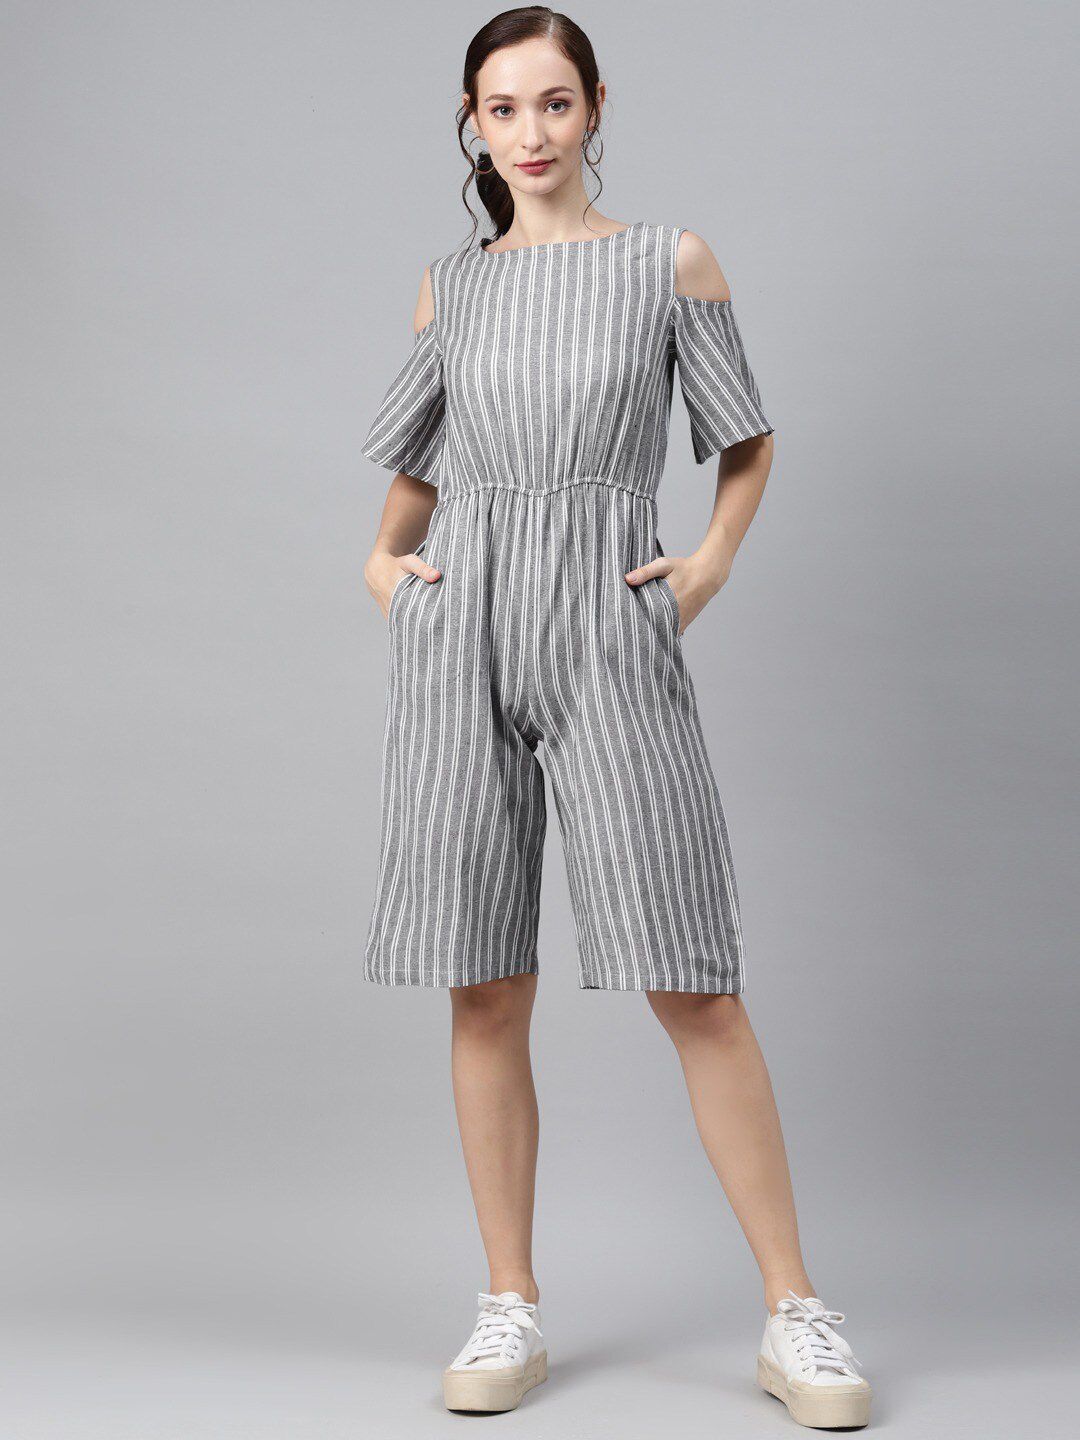 Cottinfab Grey & White Striped Capri Jumpsuit Price in India